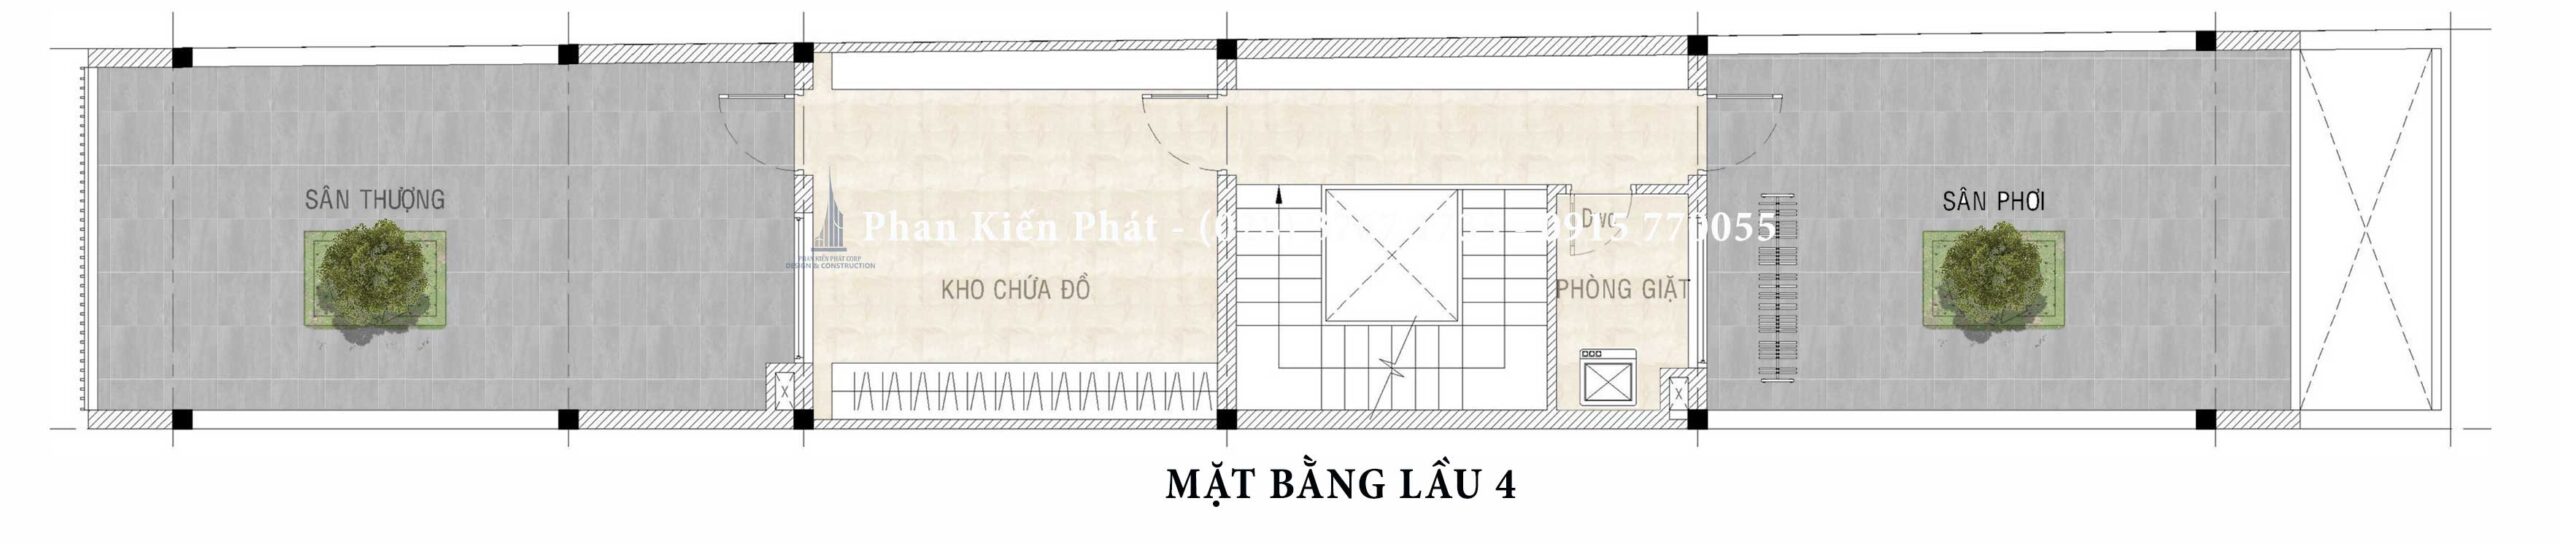 Mat Bang Lau 4 Nha Pho 4 Lau Ket Hop Phong Kham